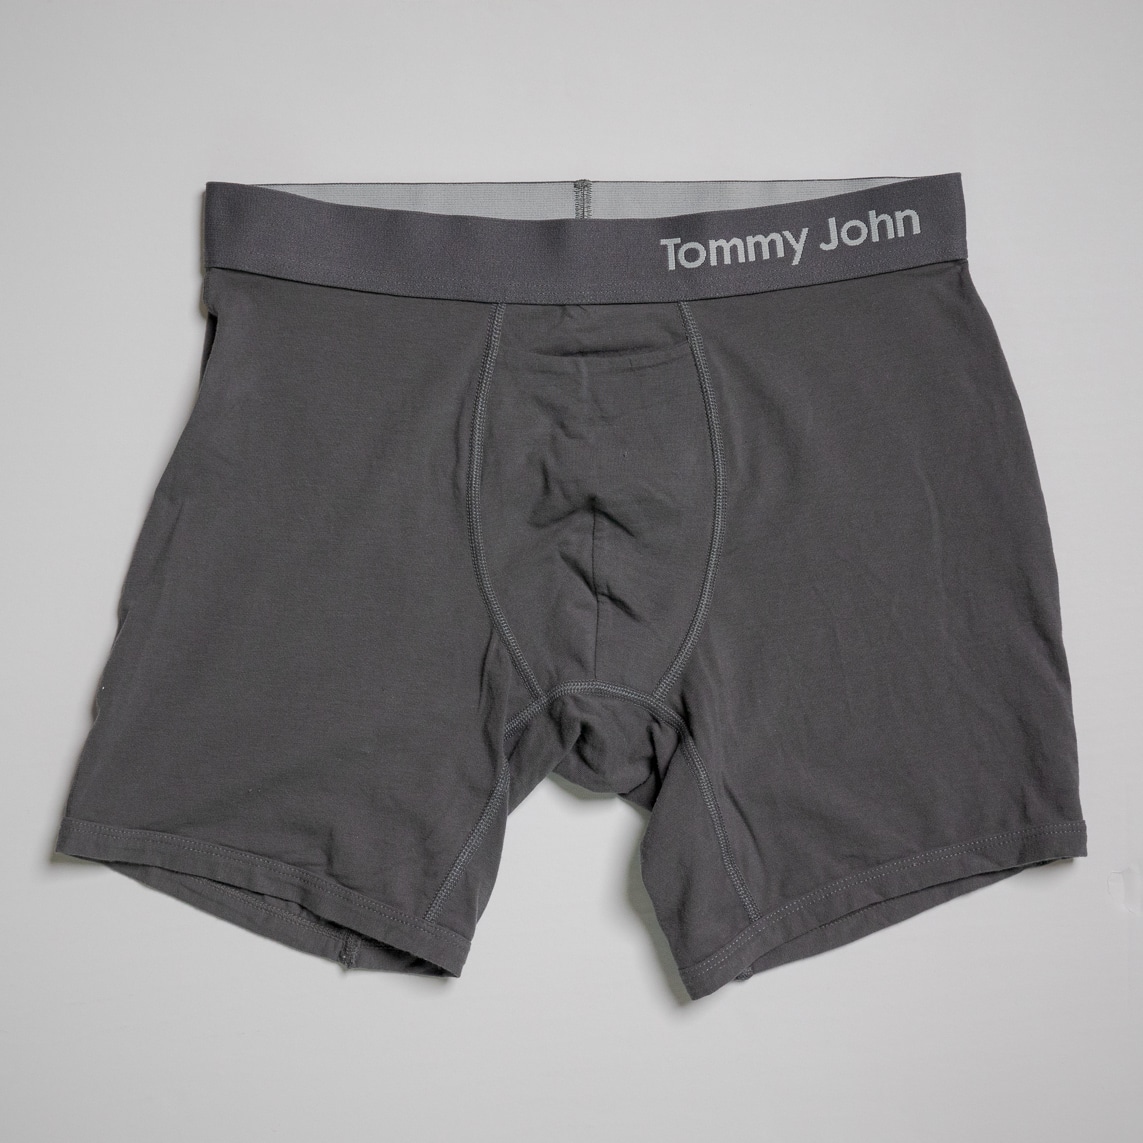 https://www.themodestman.com/wp-content/uploads/2021/08/Tommy-John-Cool-Cotton-Boxer-Briefs.jpg